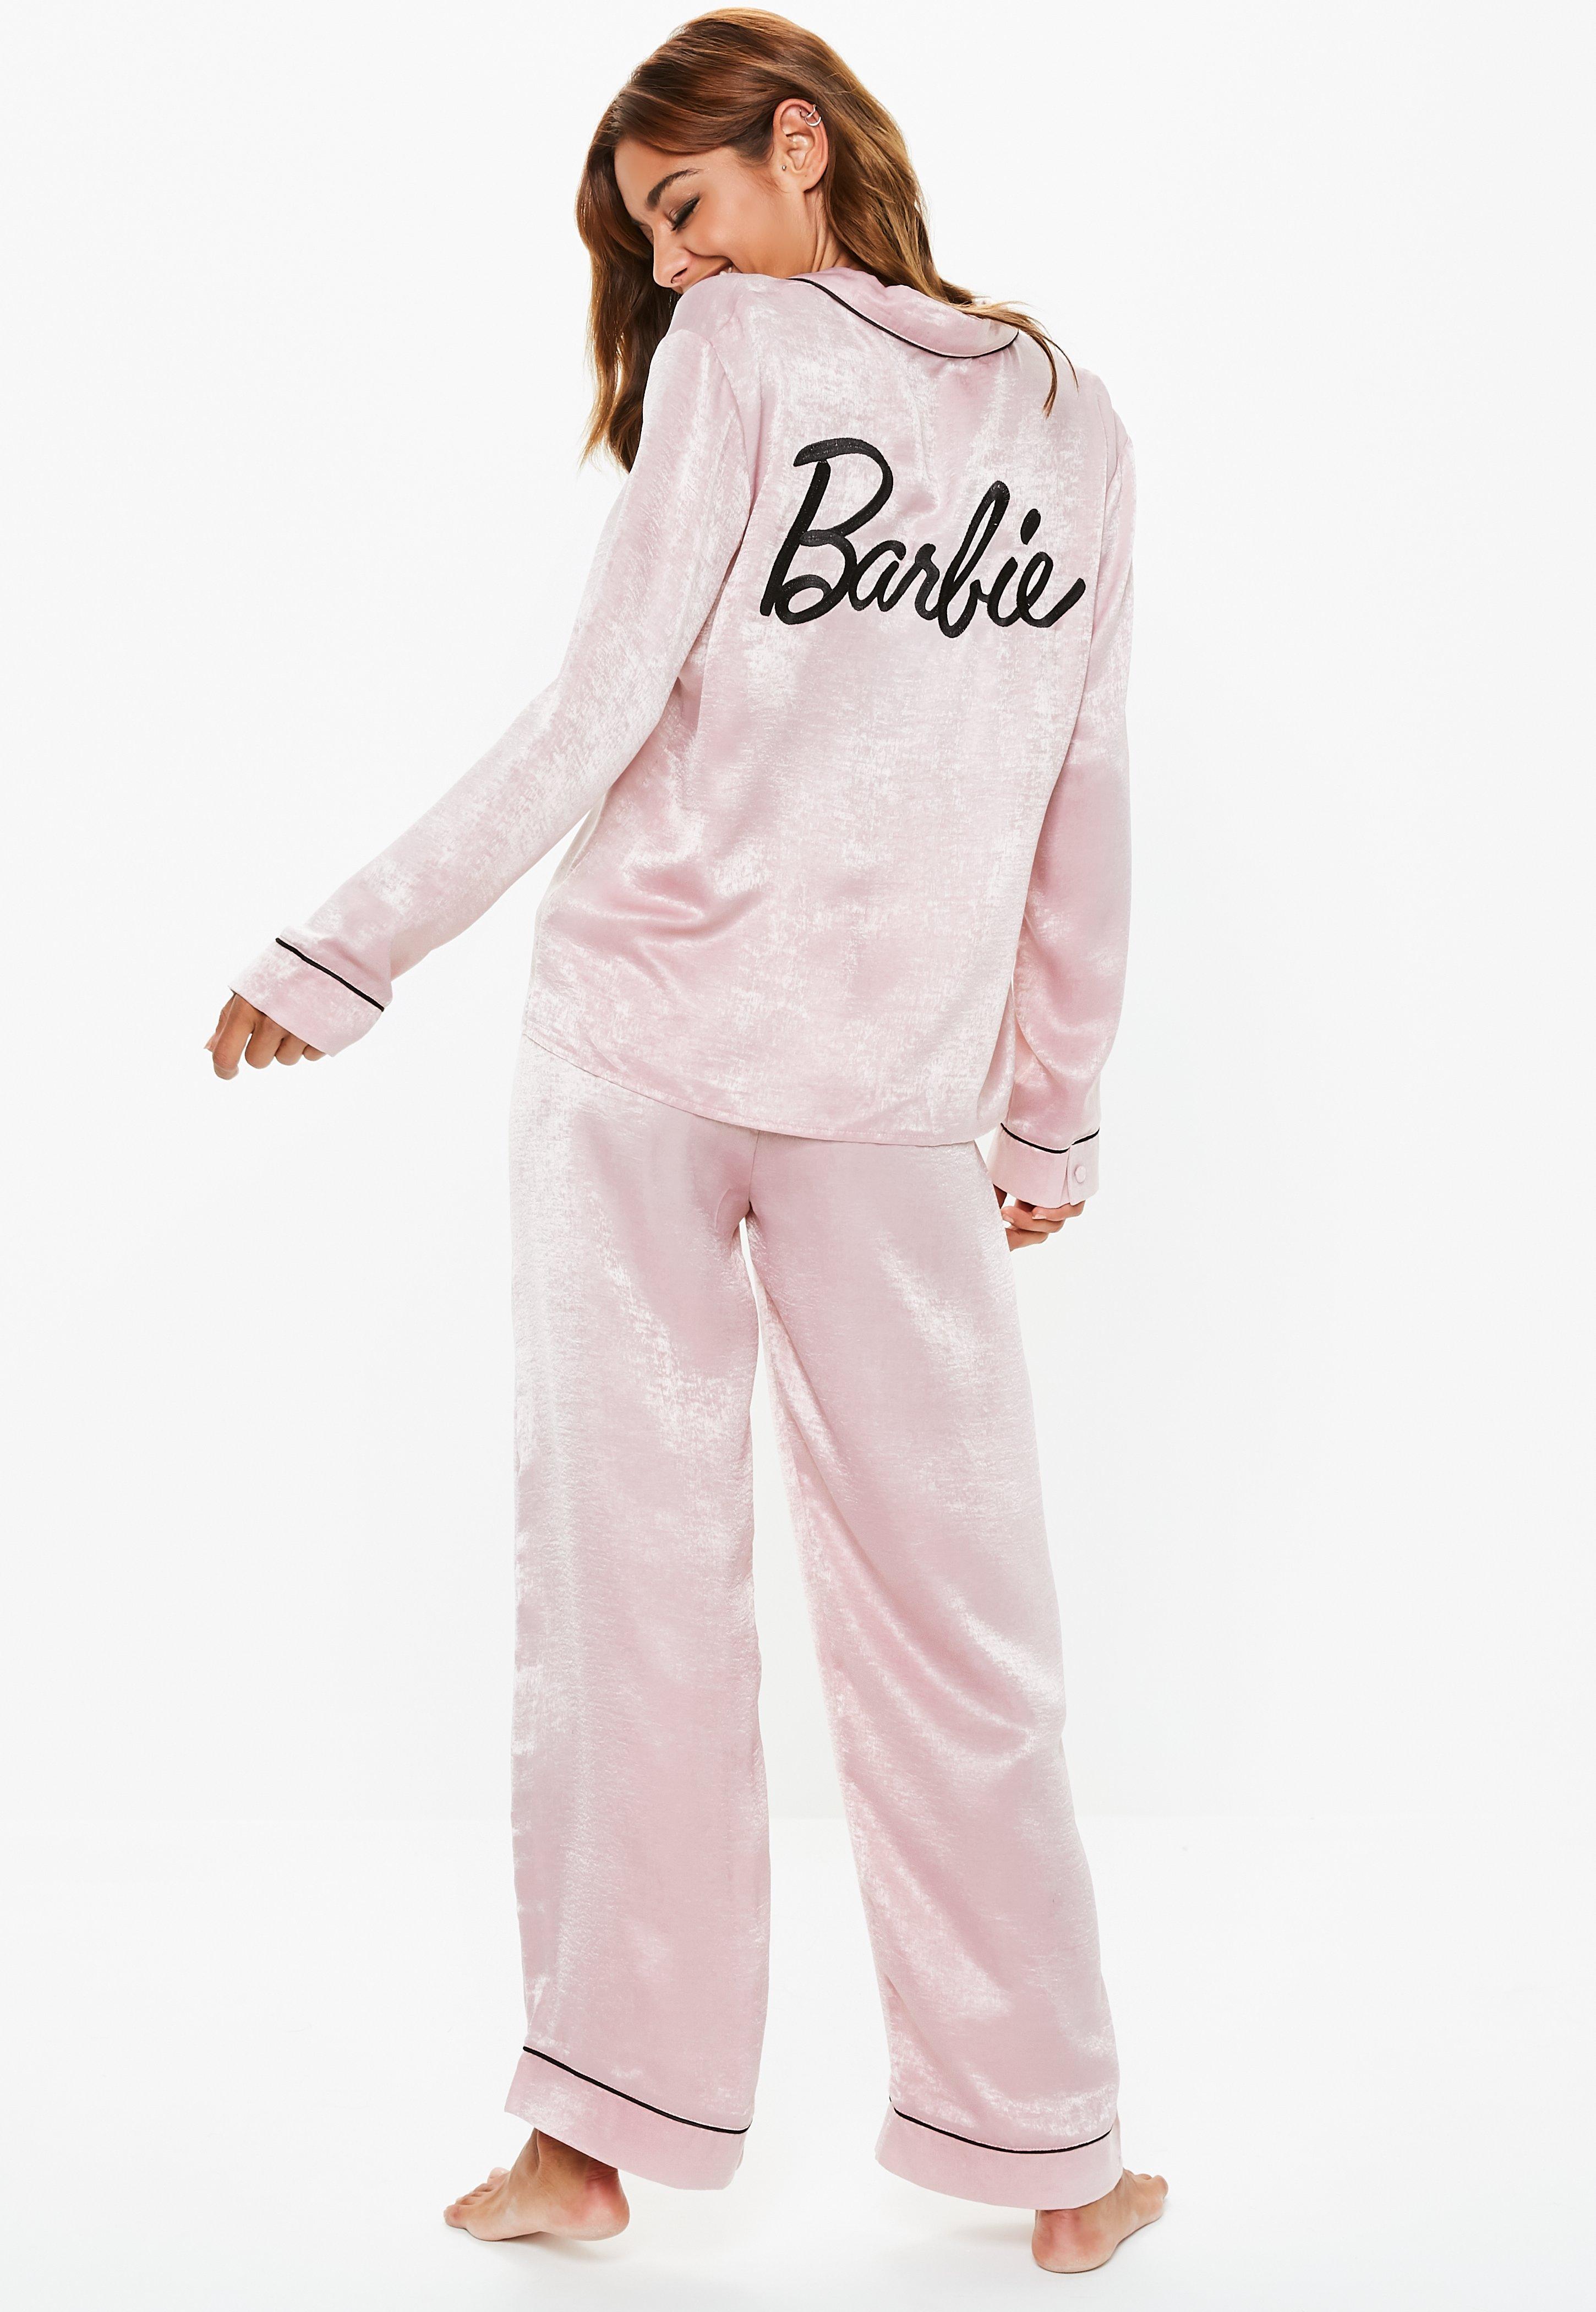 Barbie Nightwear Finland, SAVE 36% - pacificlanding.ca